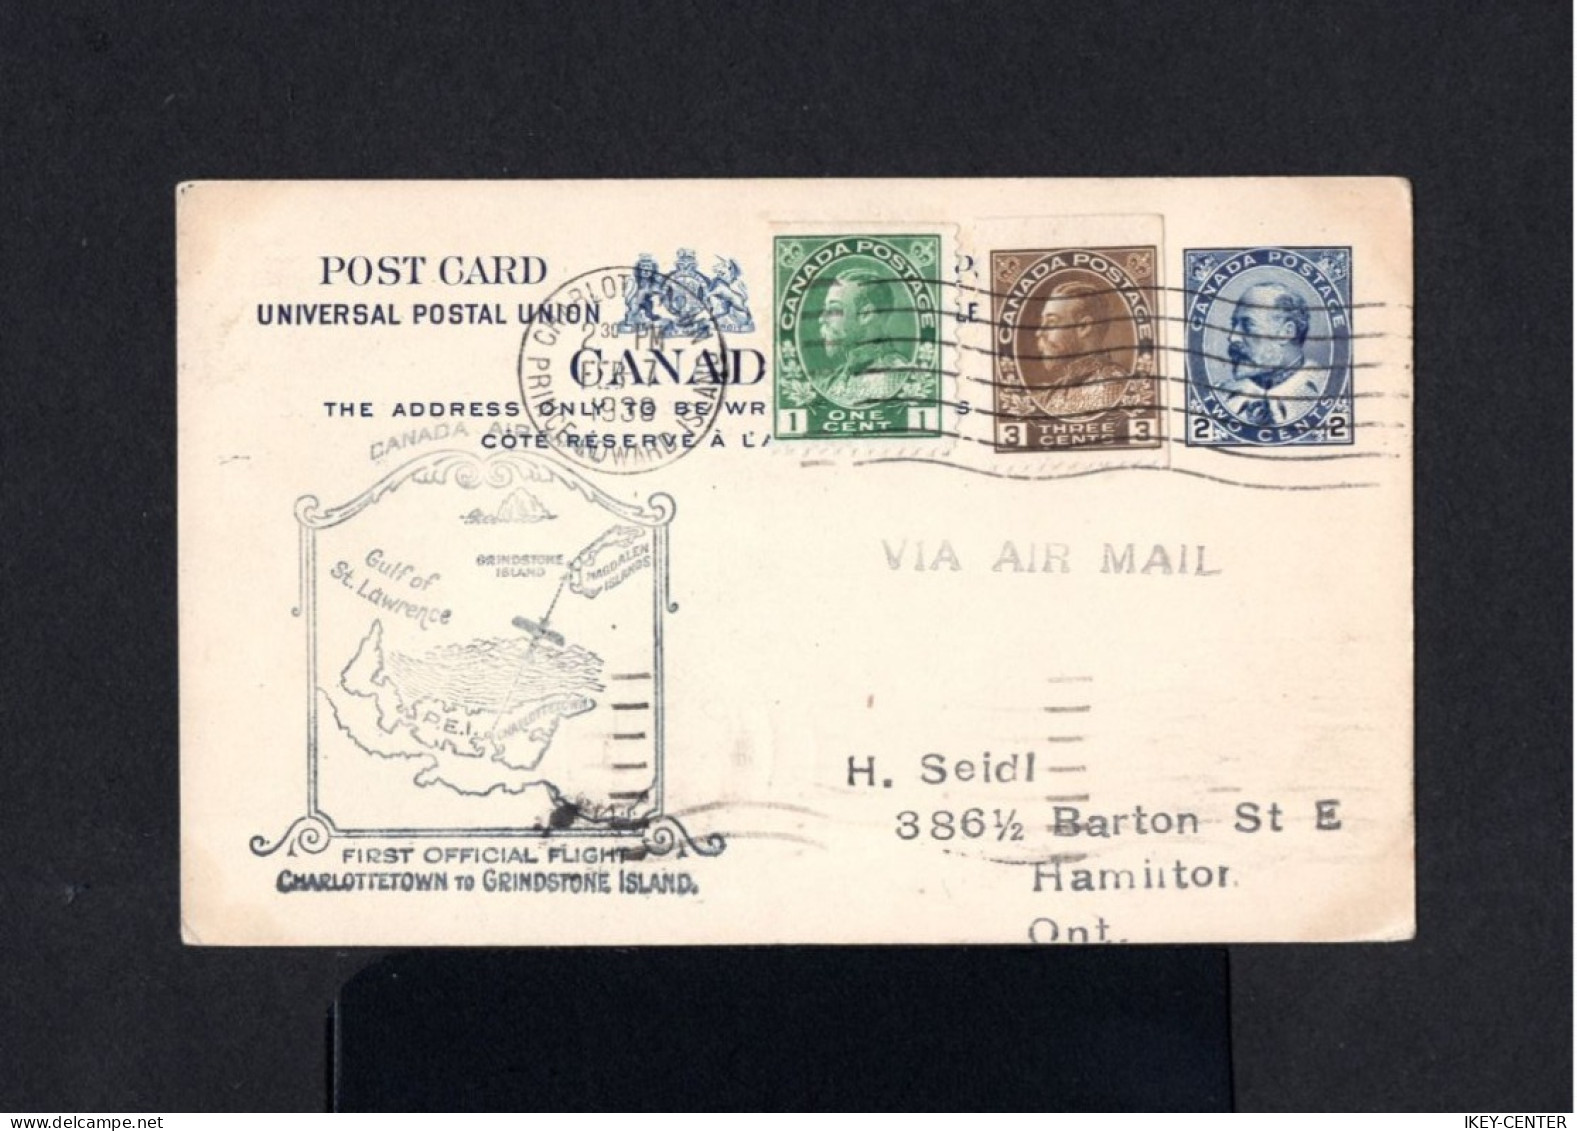 10293-CANADA-AIRMAIL POSTCARD CHARLOTTETOWN To HAMILTON (ontario)1933.WWII.CARTE POSTALE.POSTKARTE.First Official Flight - Briefe U. Dokumente